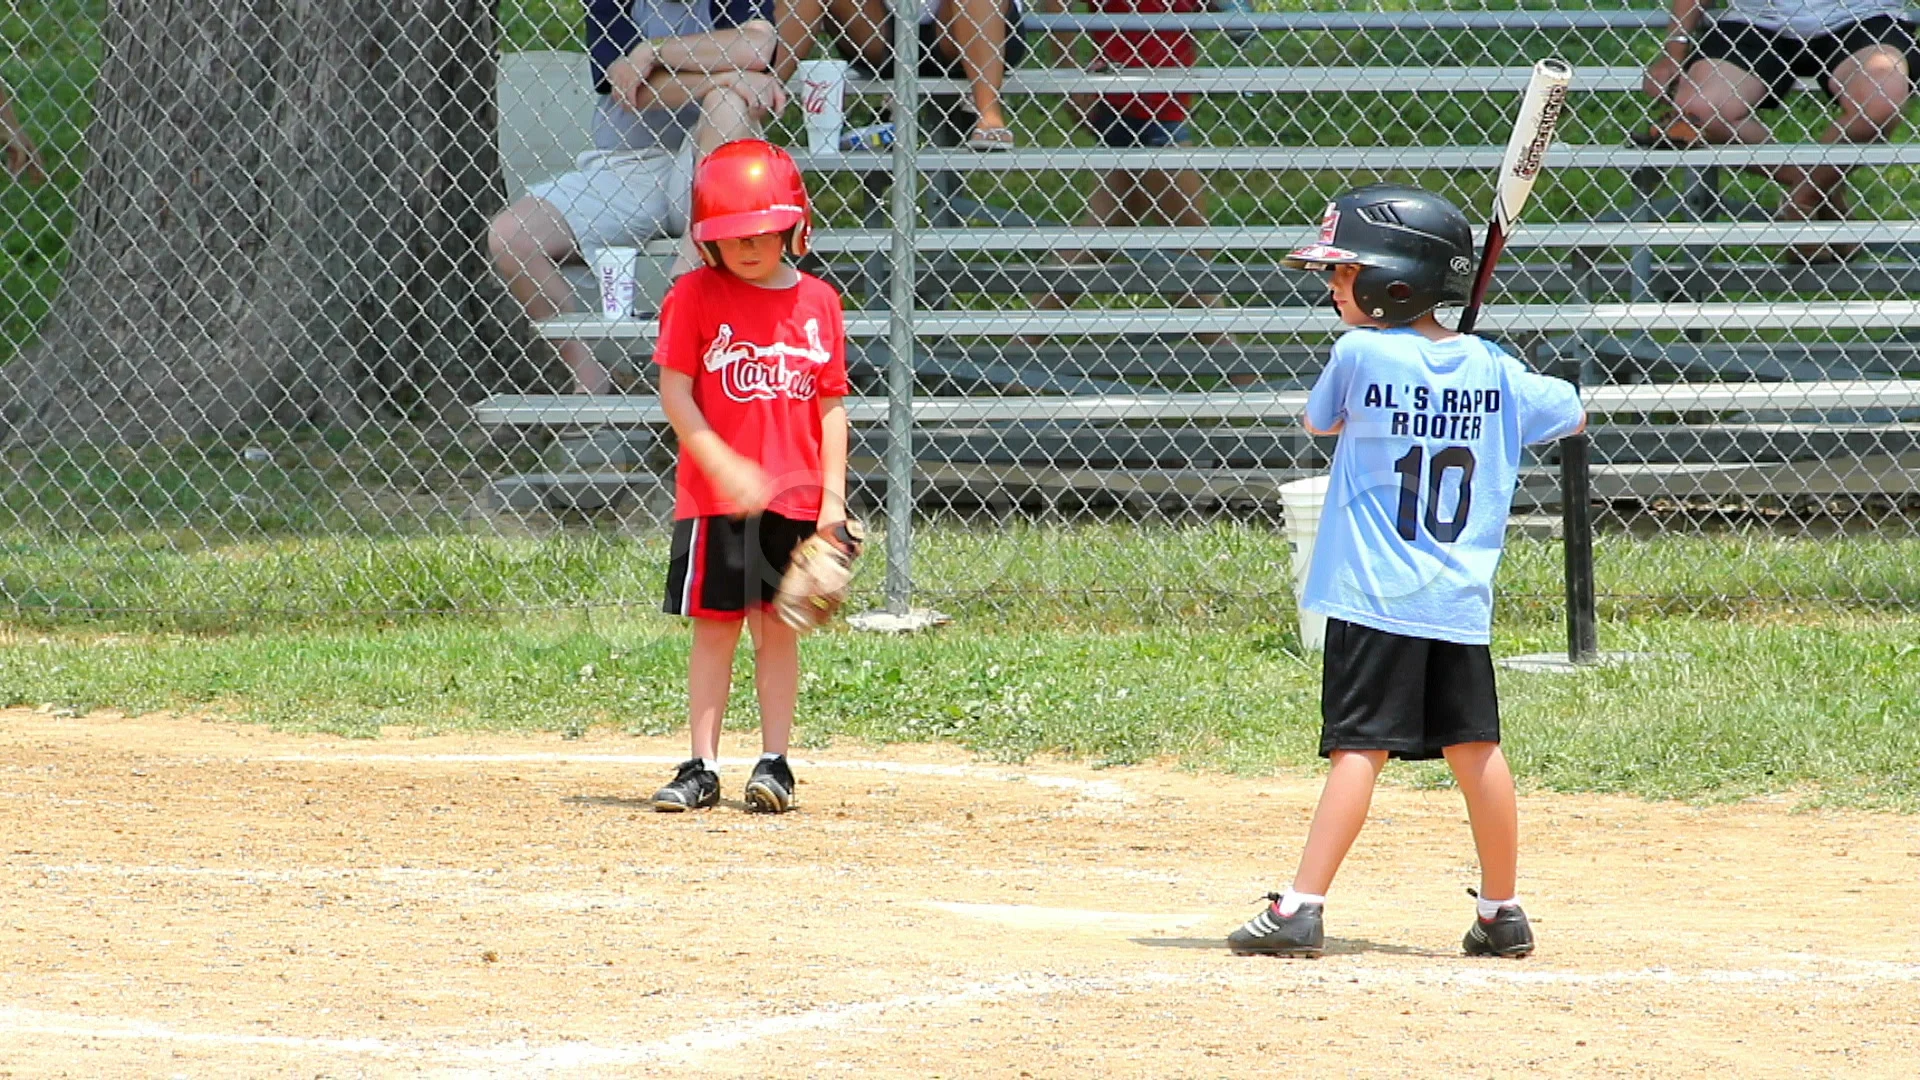 kid hitting baseball